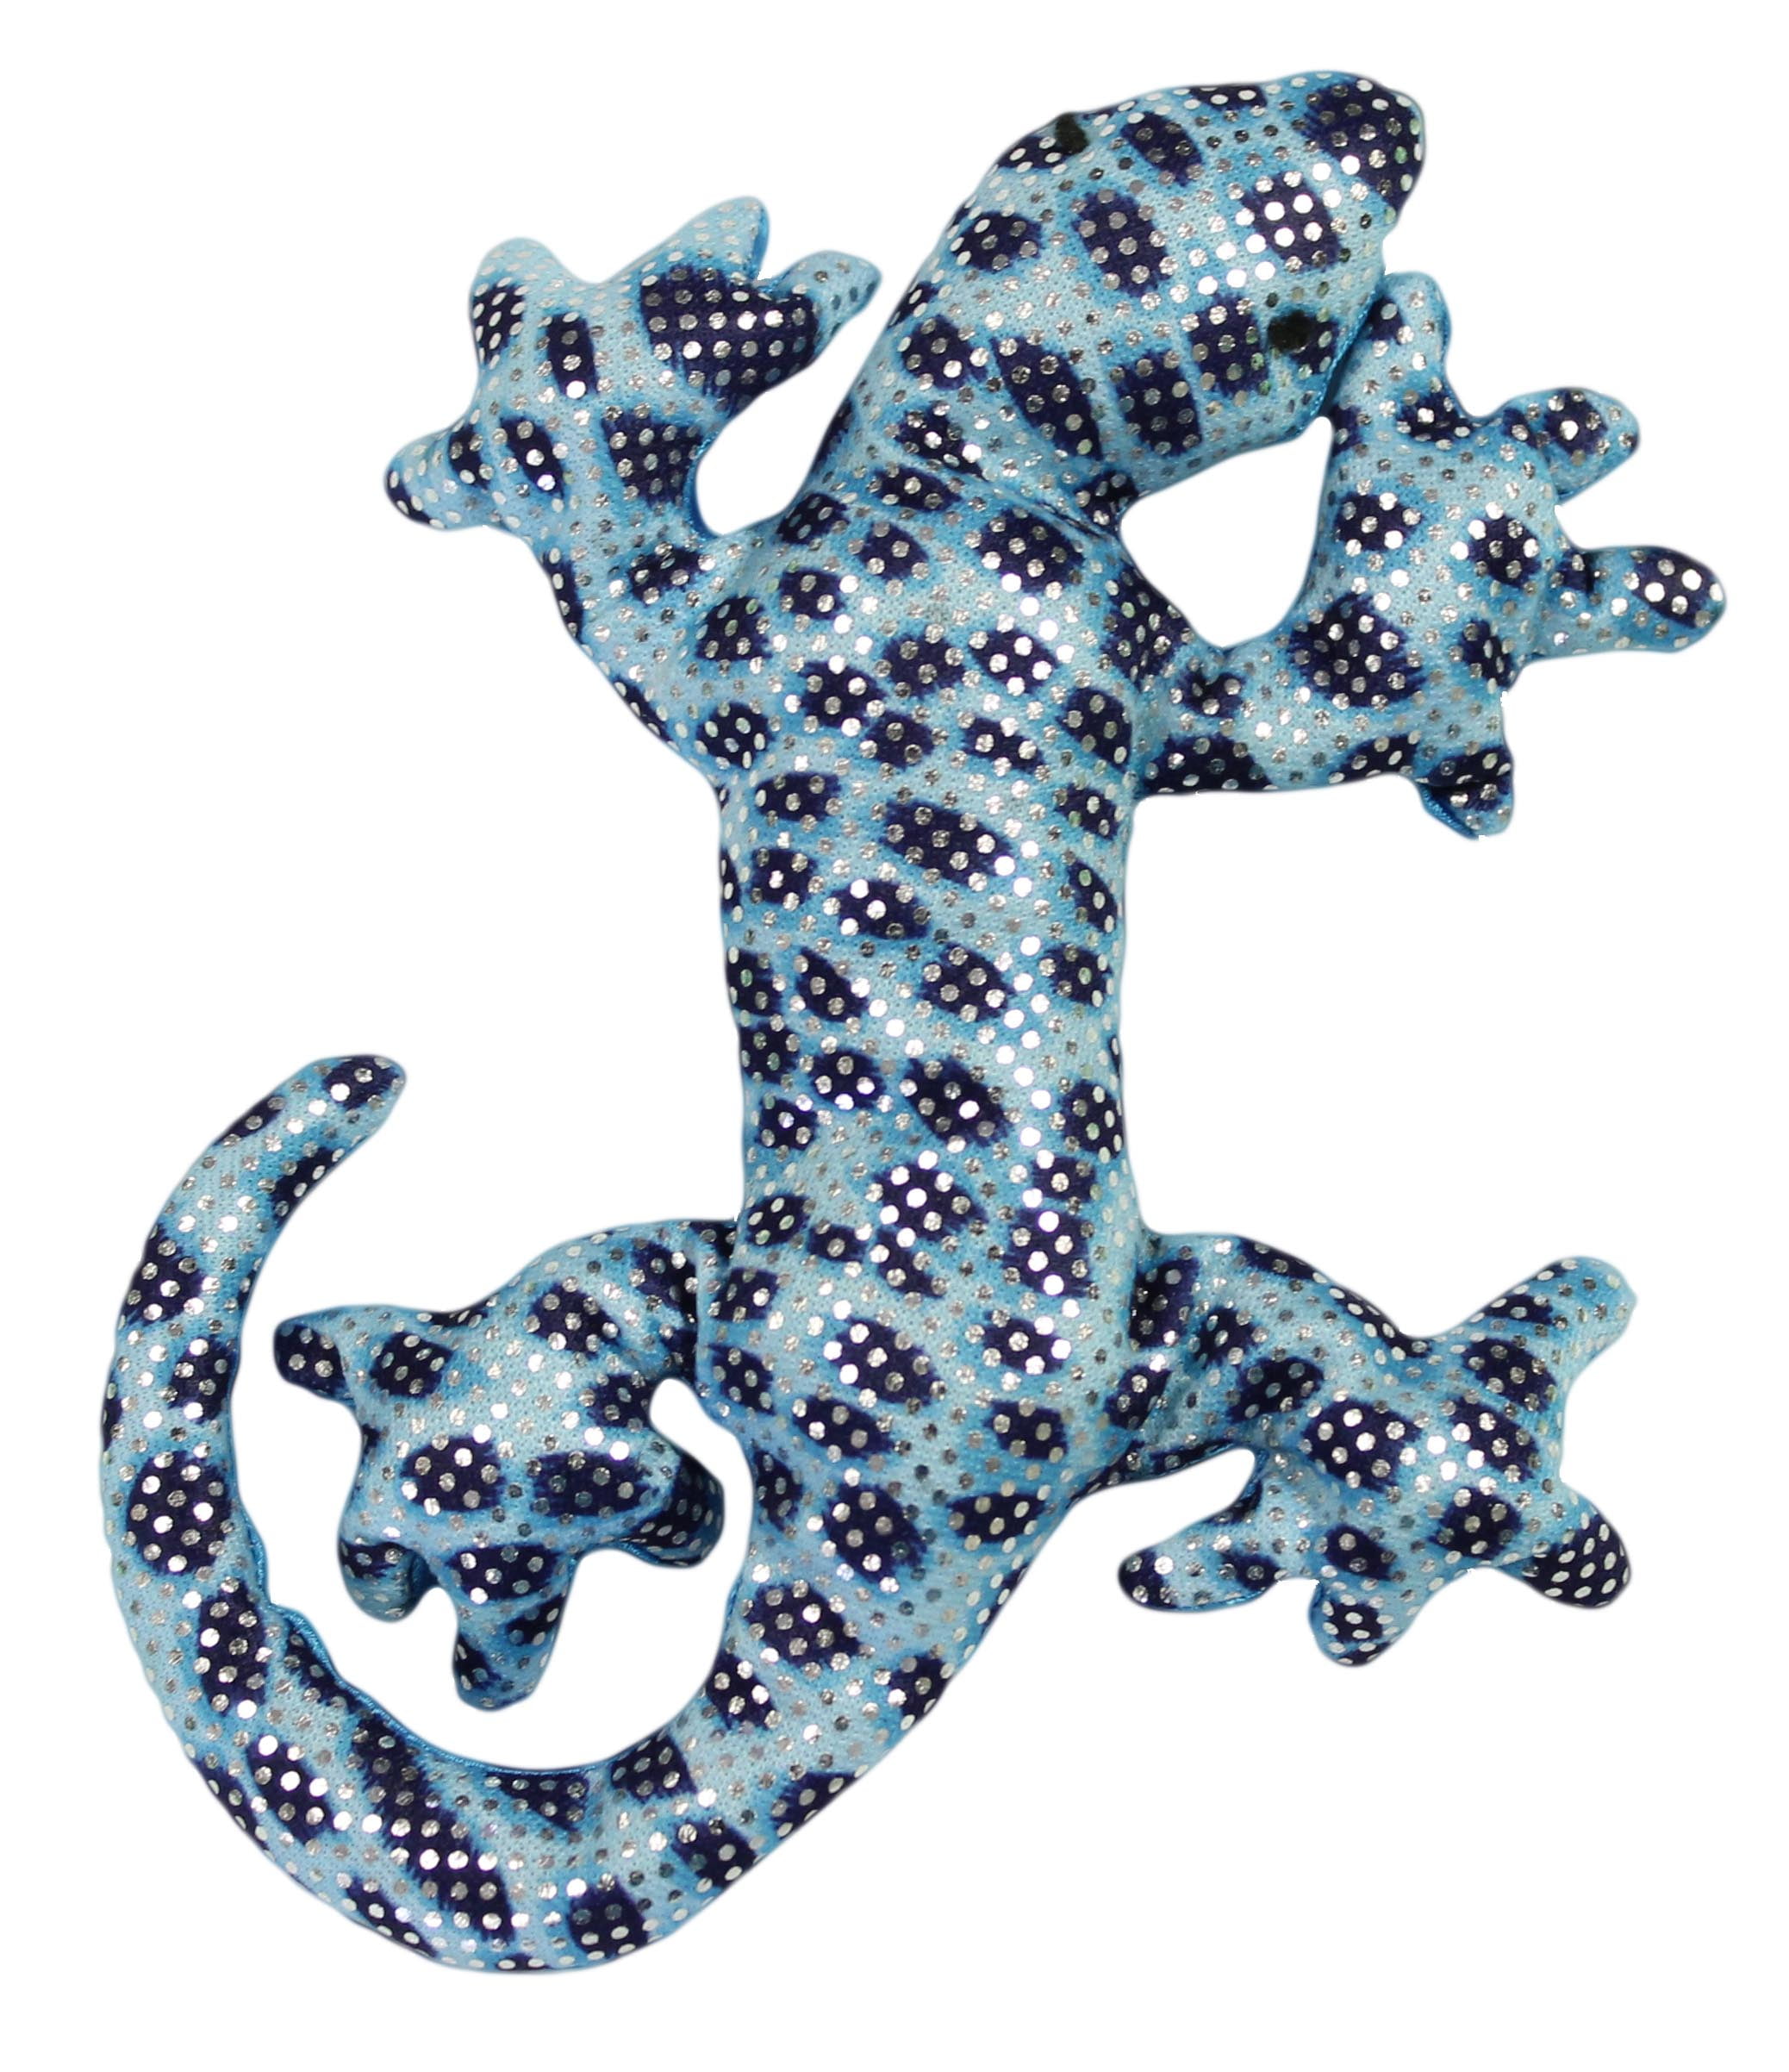 JESONN Stuffed Animals Toys Lizard Plush A 